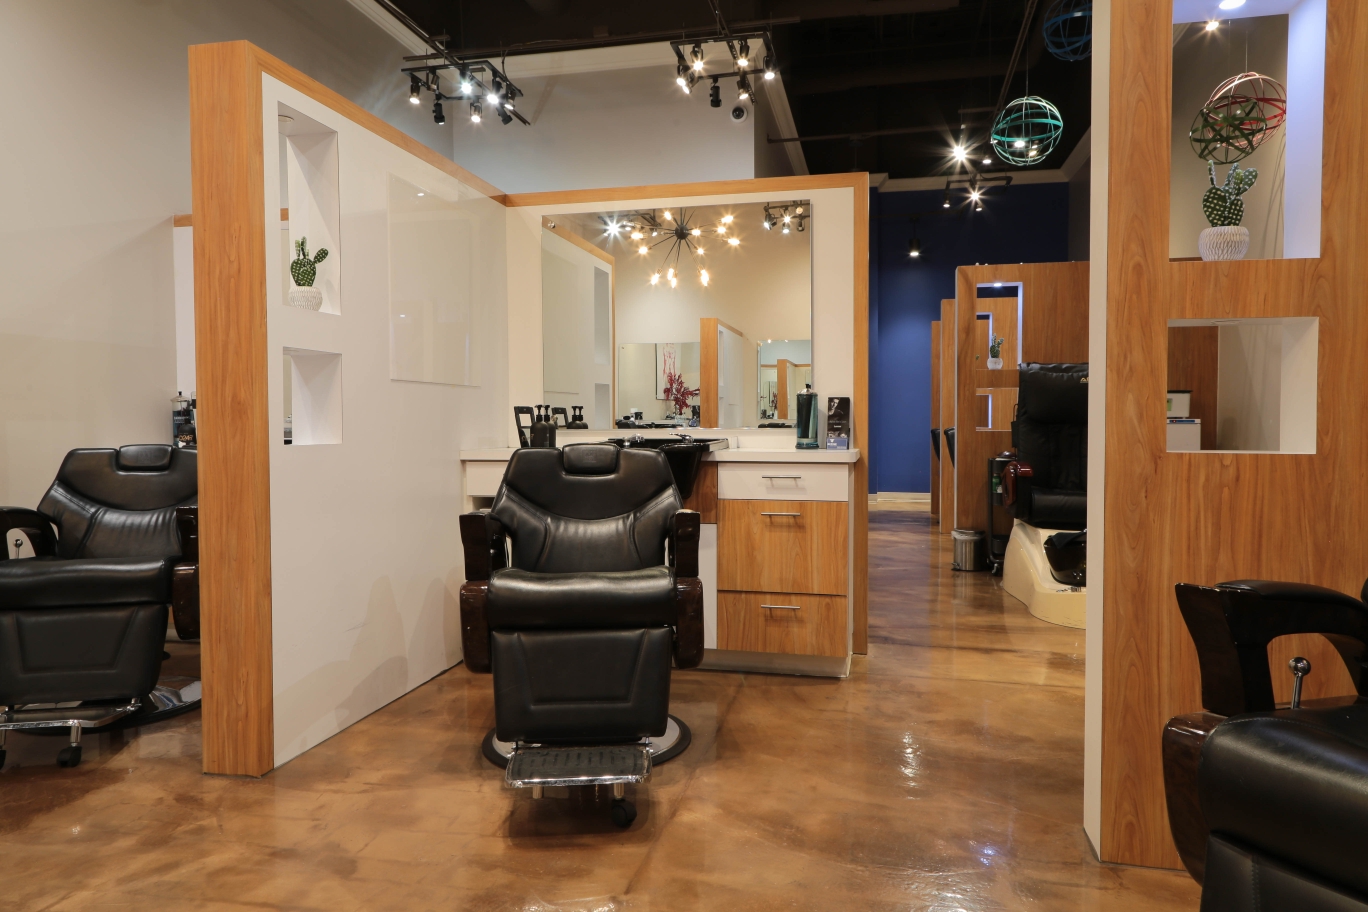 Salon Rock | Hair salon in Scottsdale, AZ